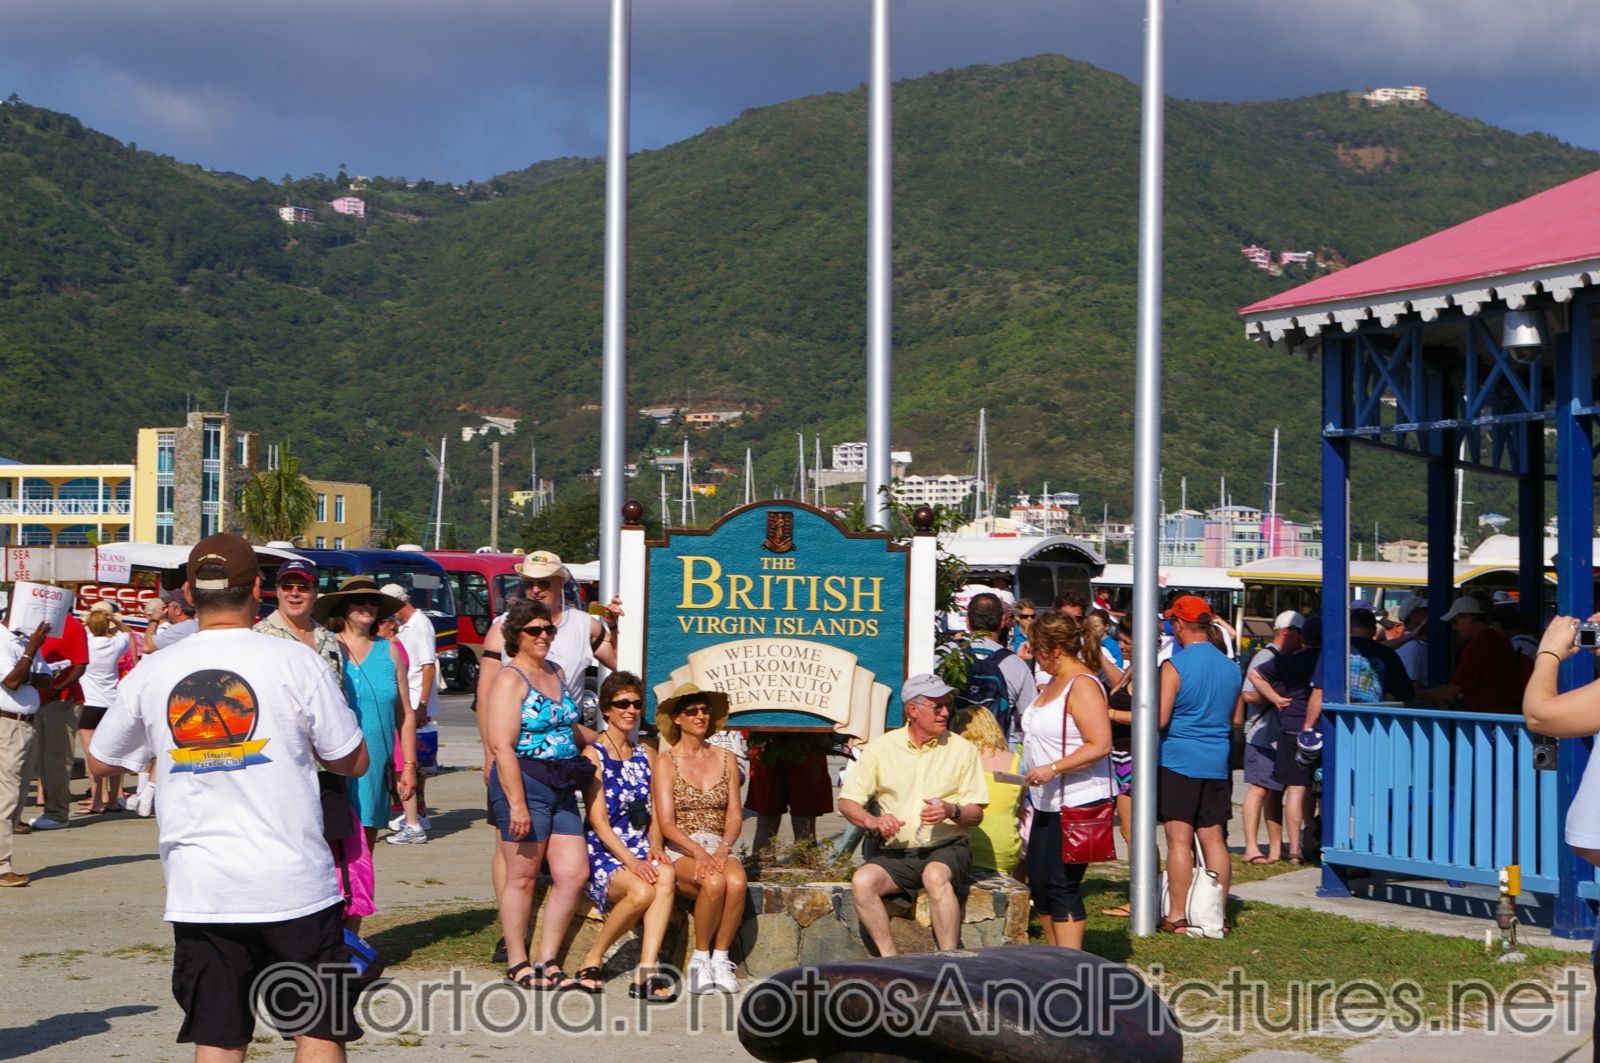 The British Virgin Islands sign at the Tortola cruise pier area.jpg
